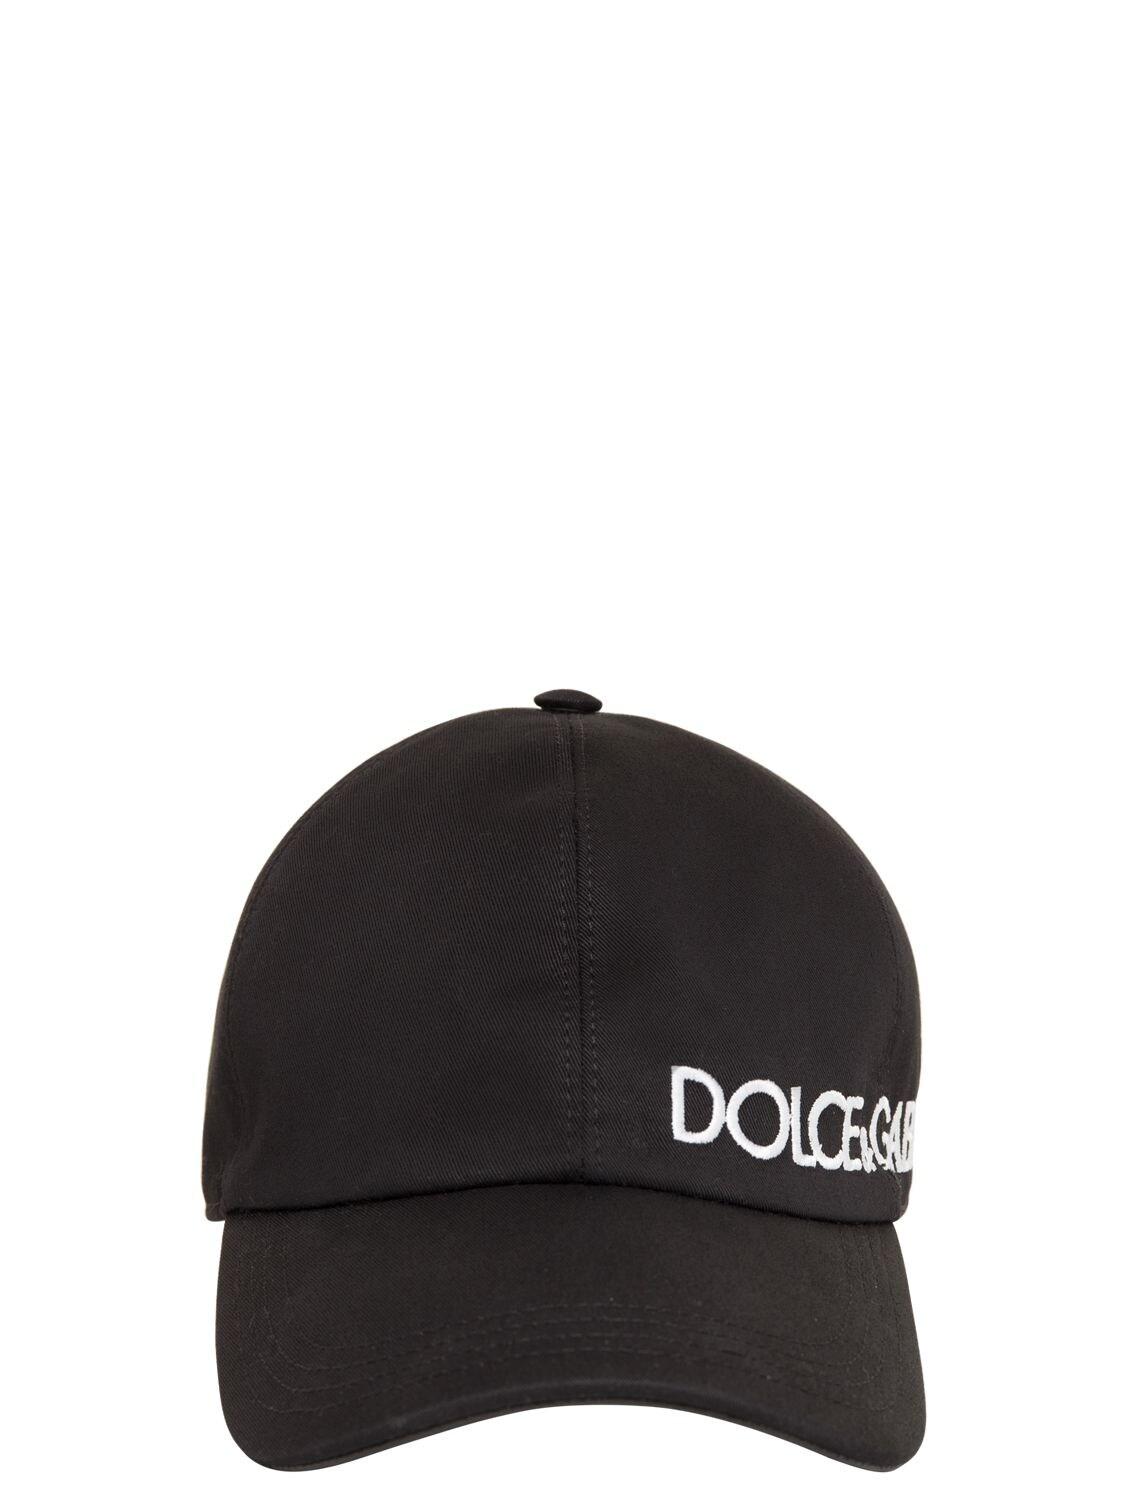 Dolce & Gabbana Logo Embroidery Cotton Baseball Hat in Black for Men - Lyst